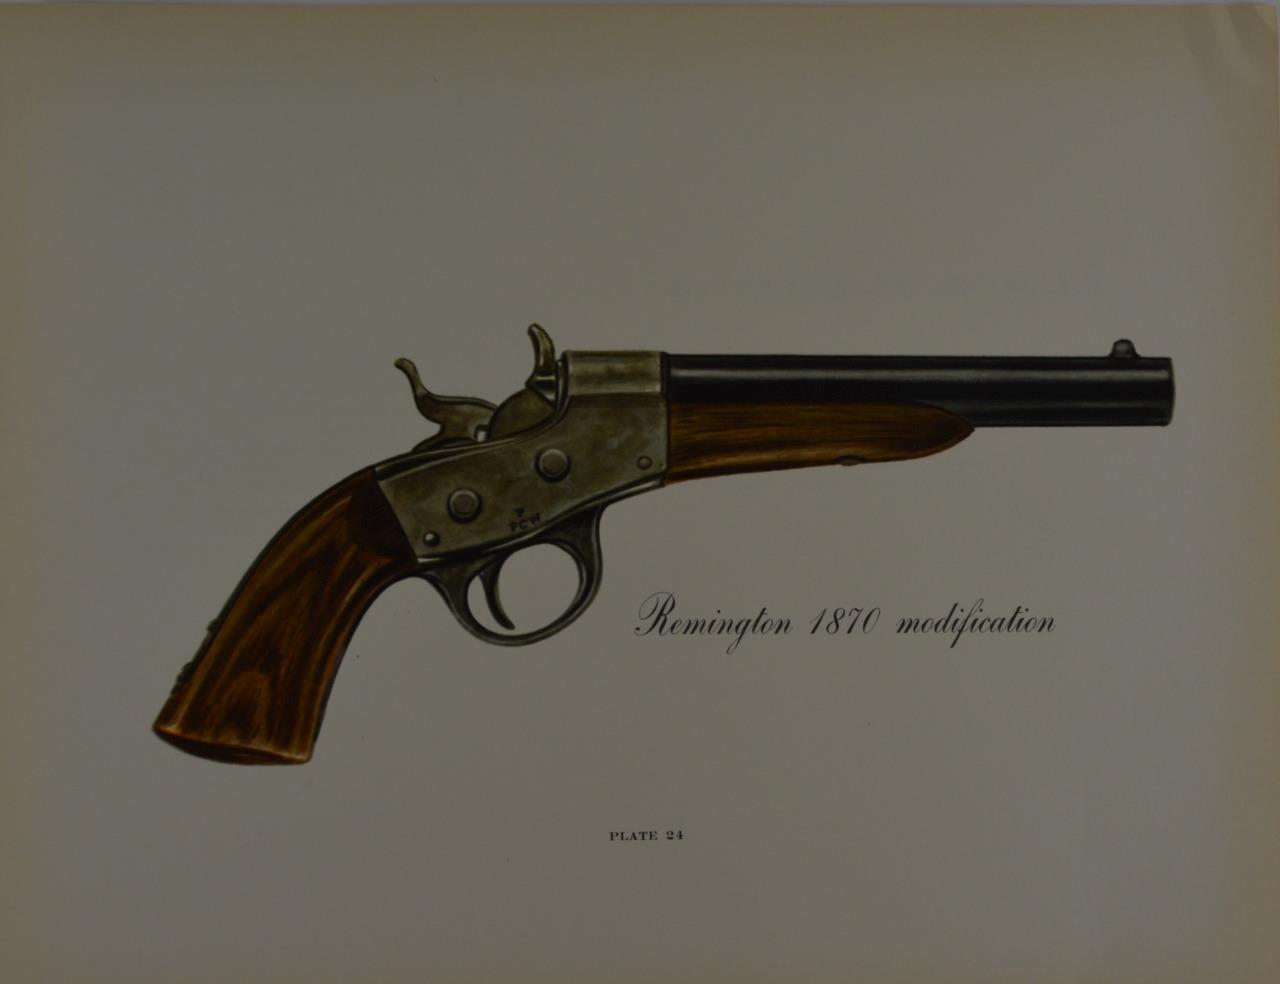 Antique US Model 1870 Remington Pistol Art Print Limited Edition 1955 Original